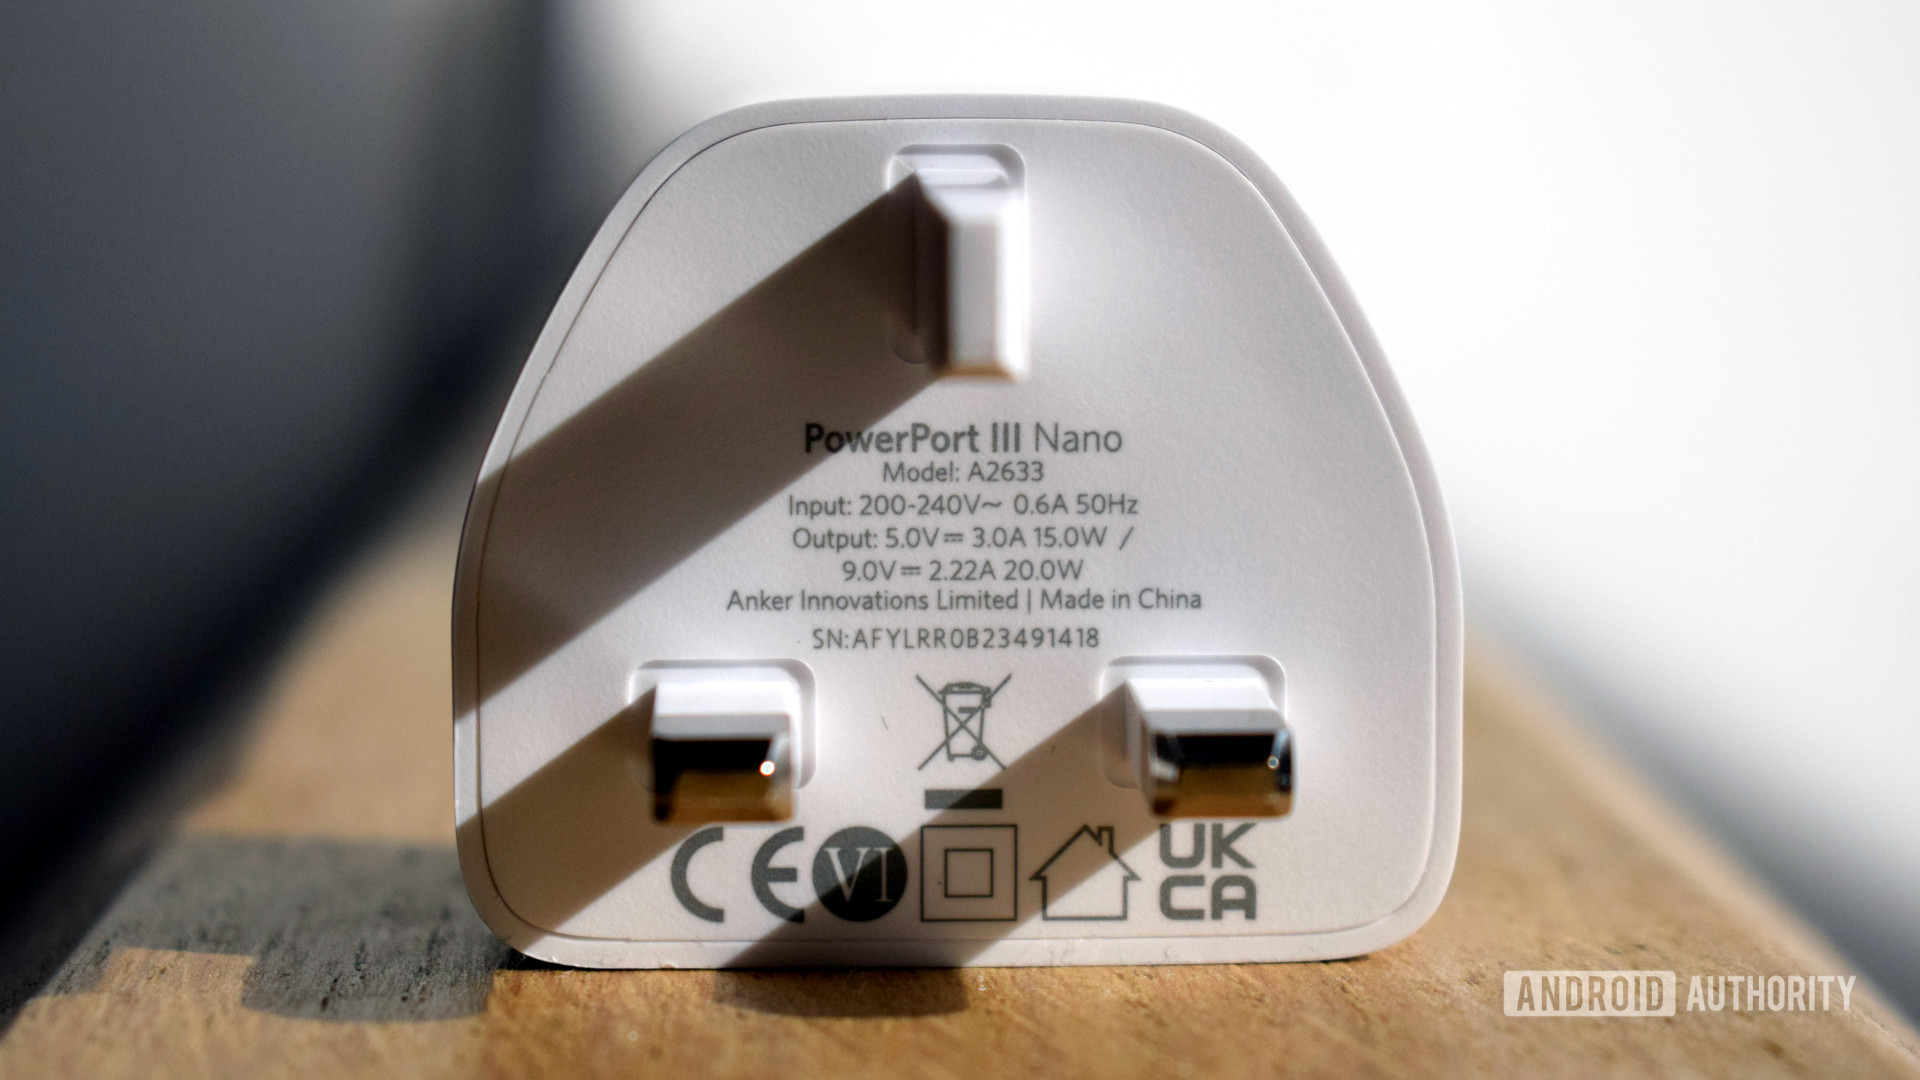 Anker PowerPort III Nano plug specs